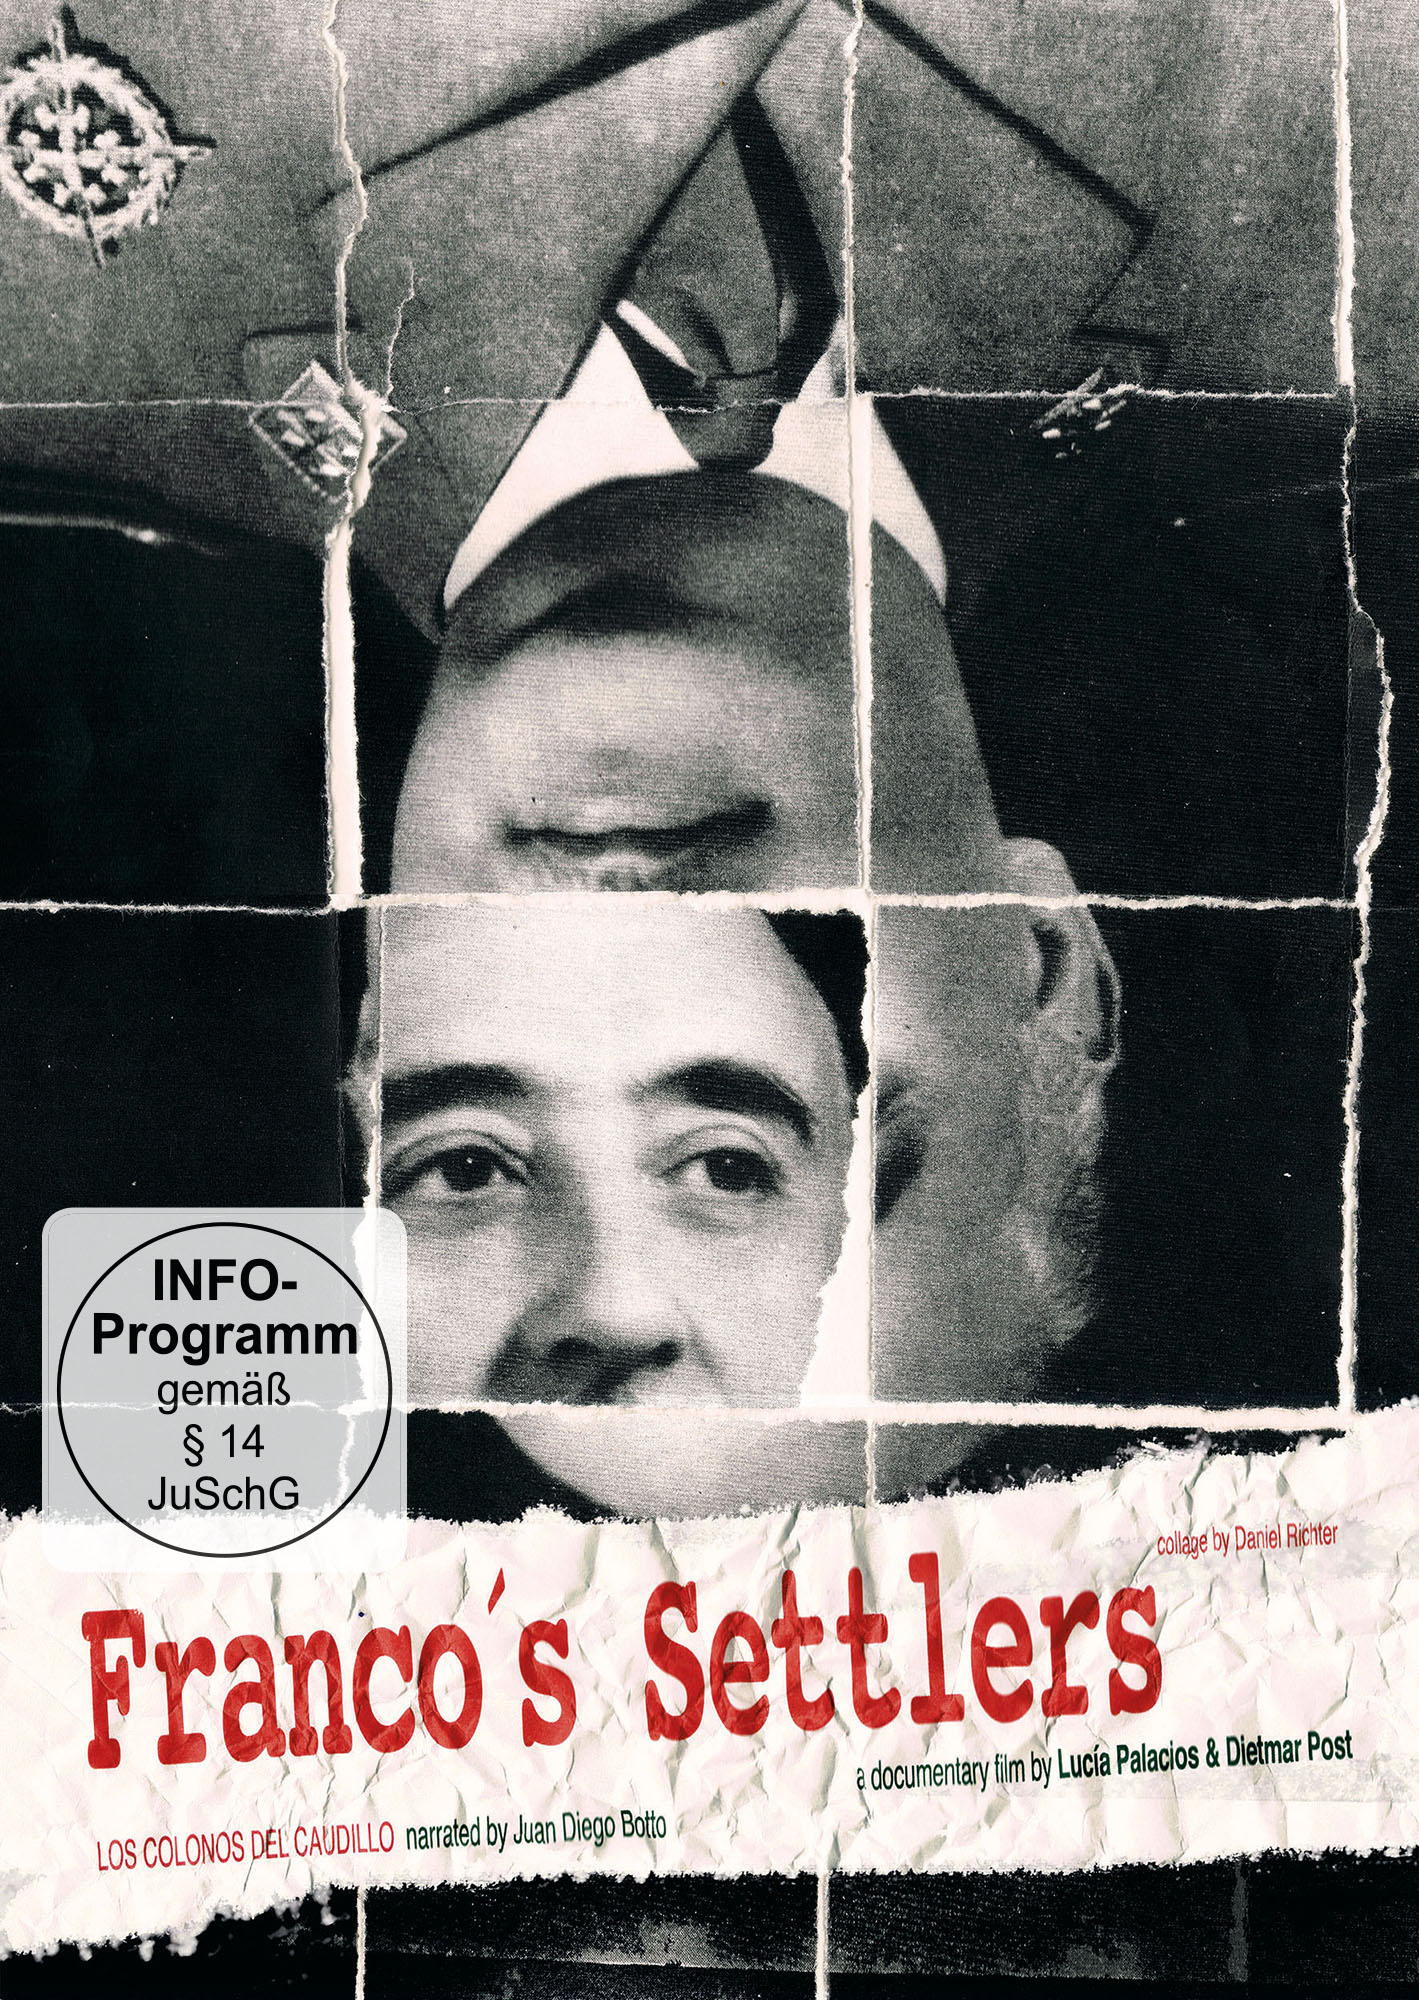 Die Francos Siedler DVD